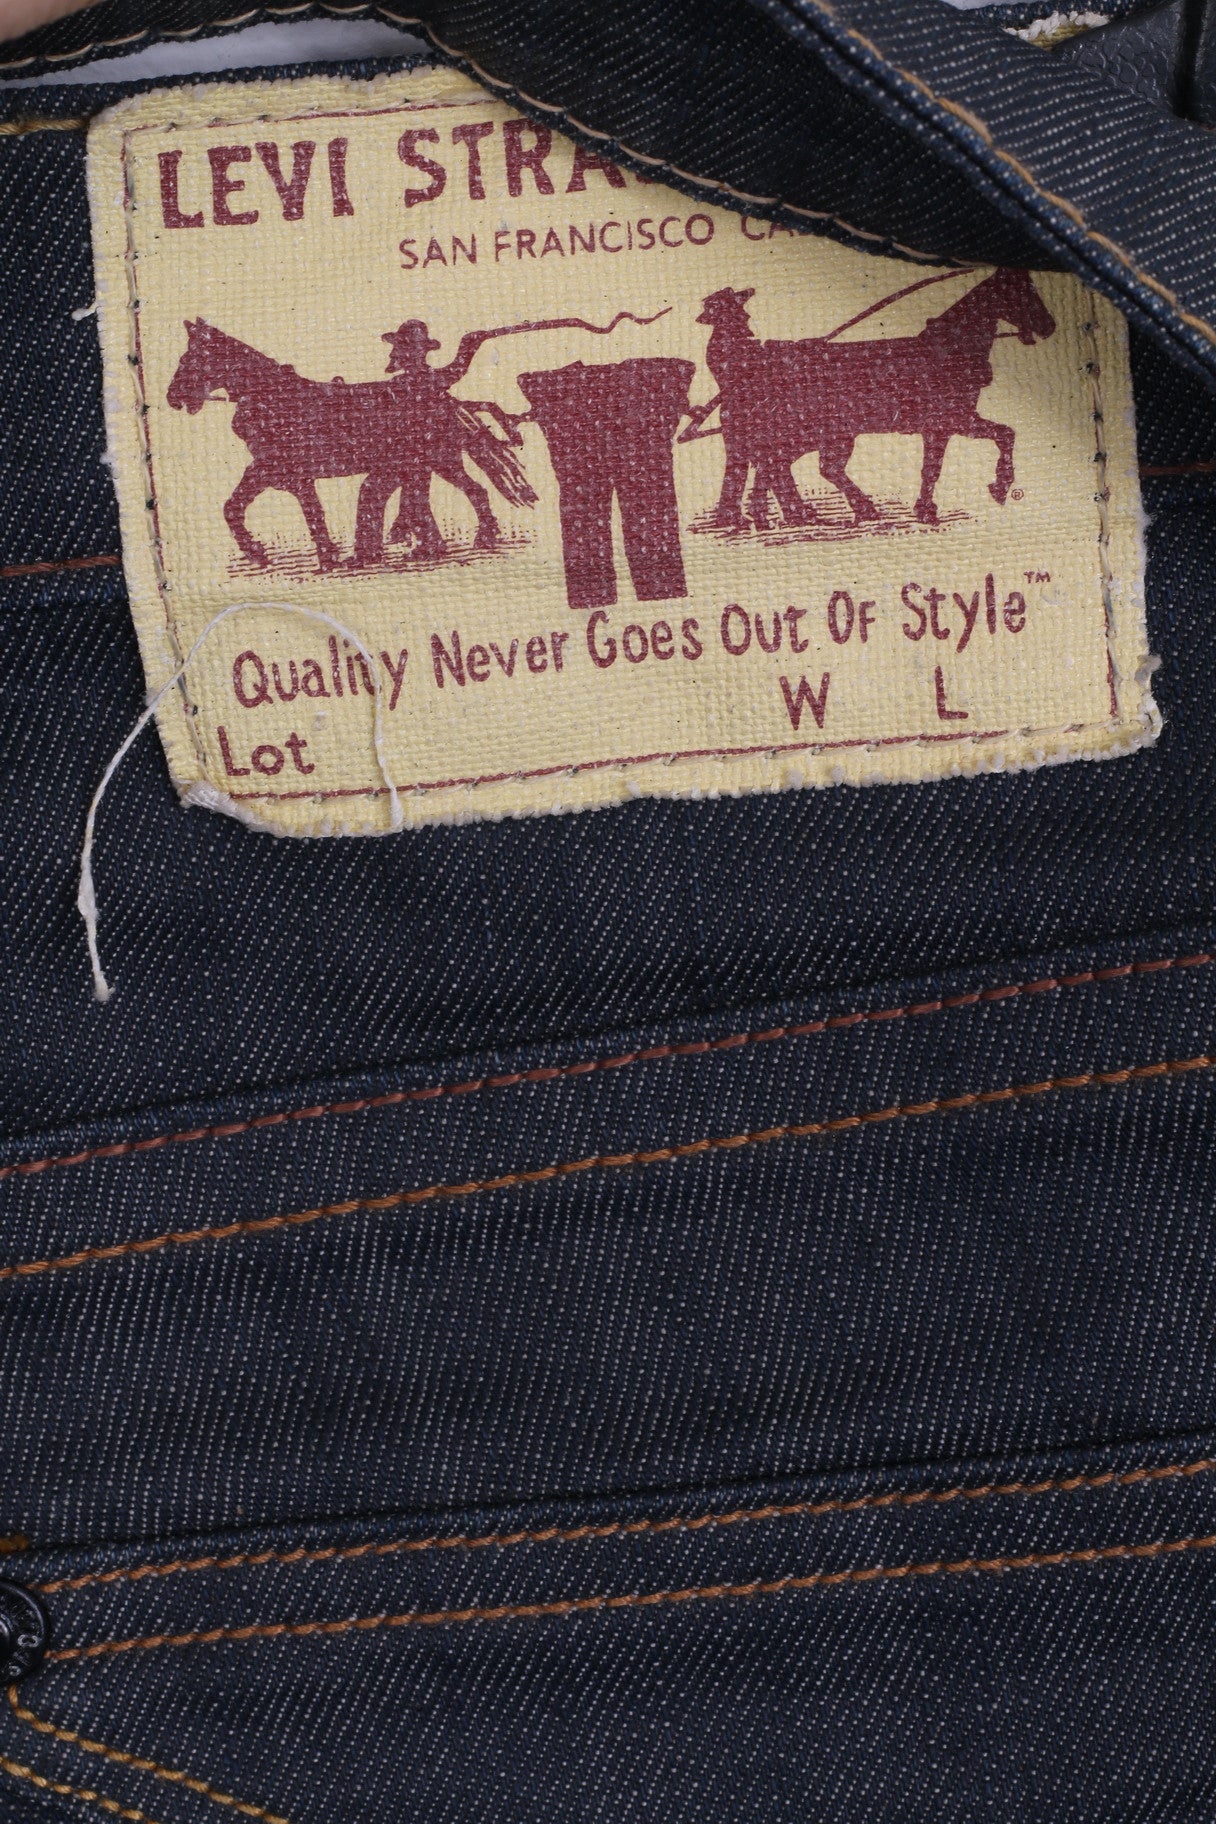 Levi Strauss &Co Mens W28 L32 Trousers Denim Navy Jeans Cotton 504 Straight